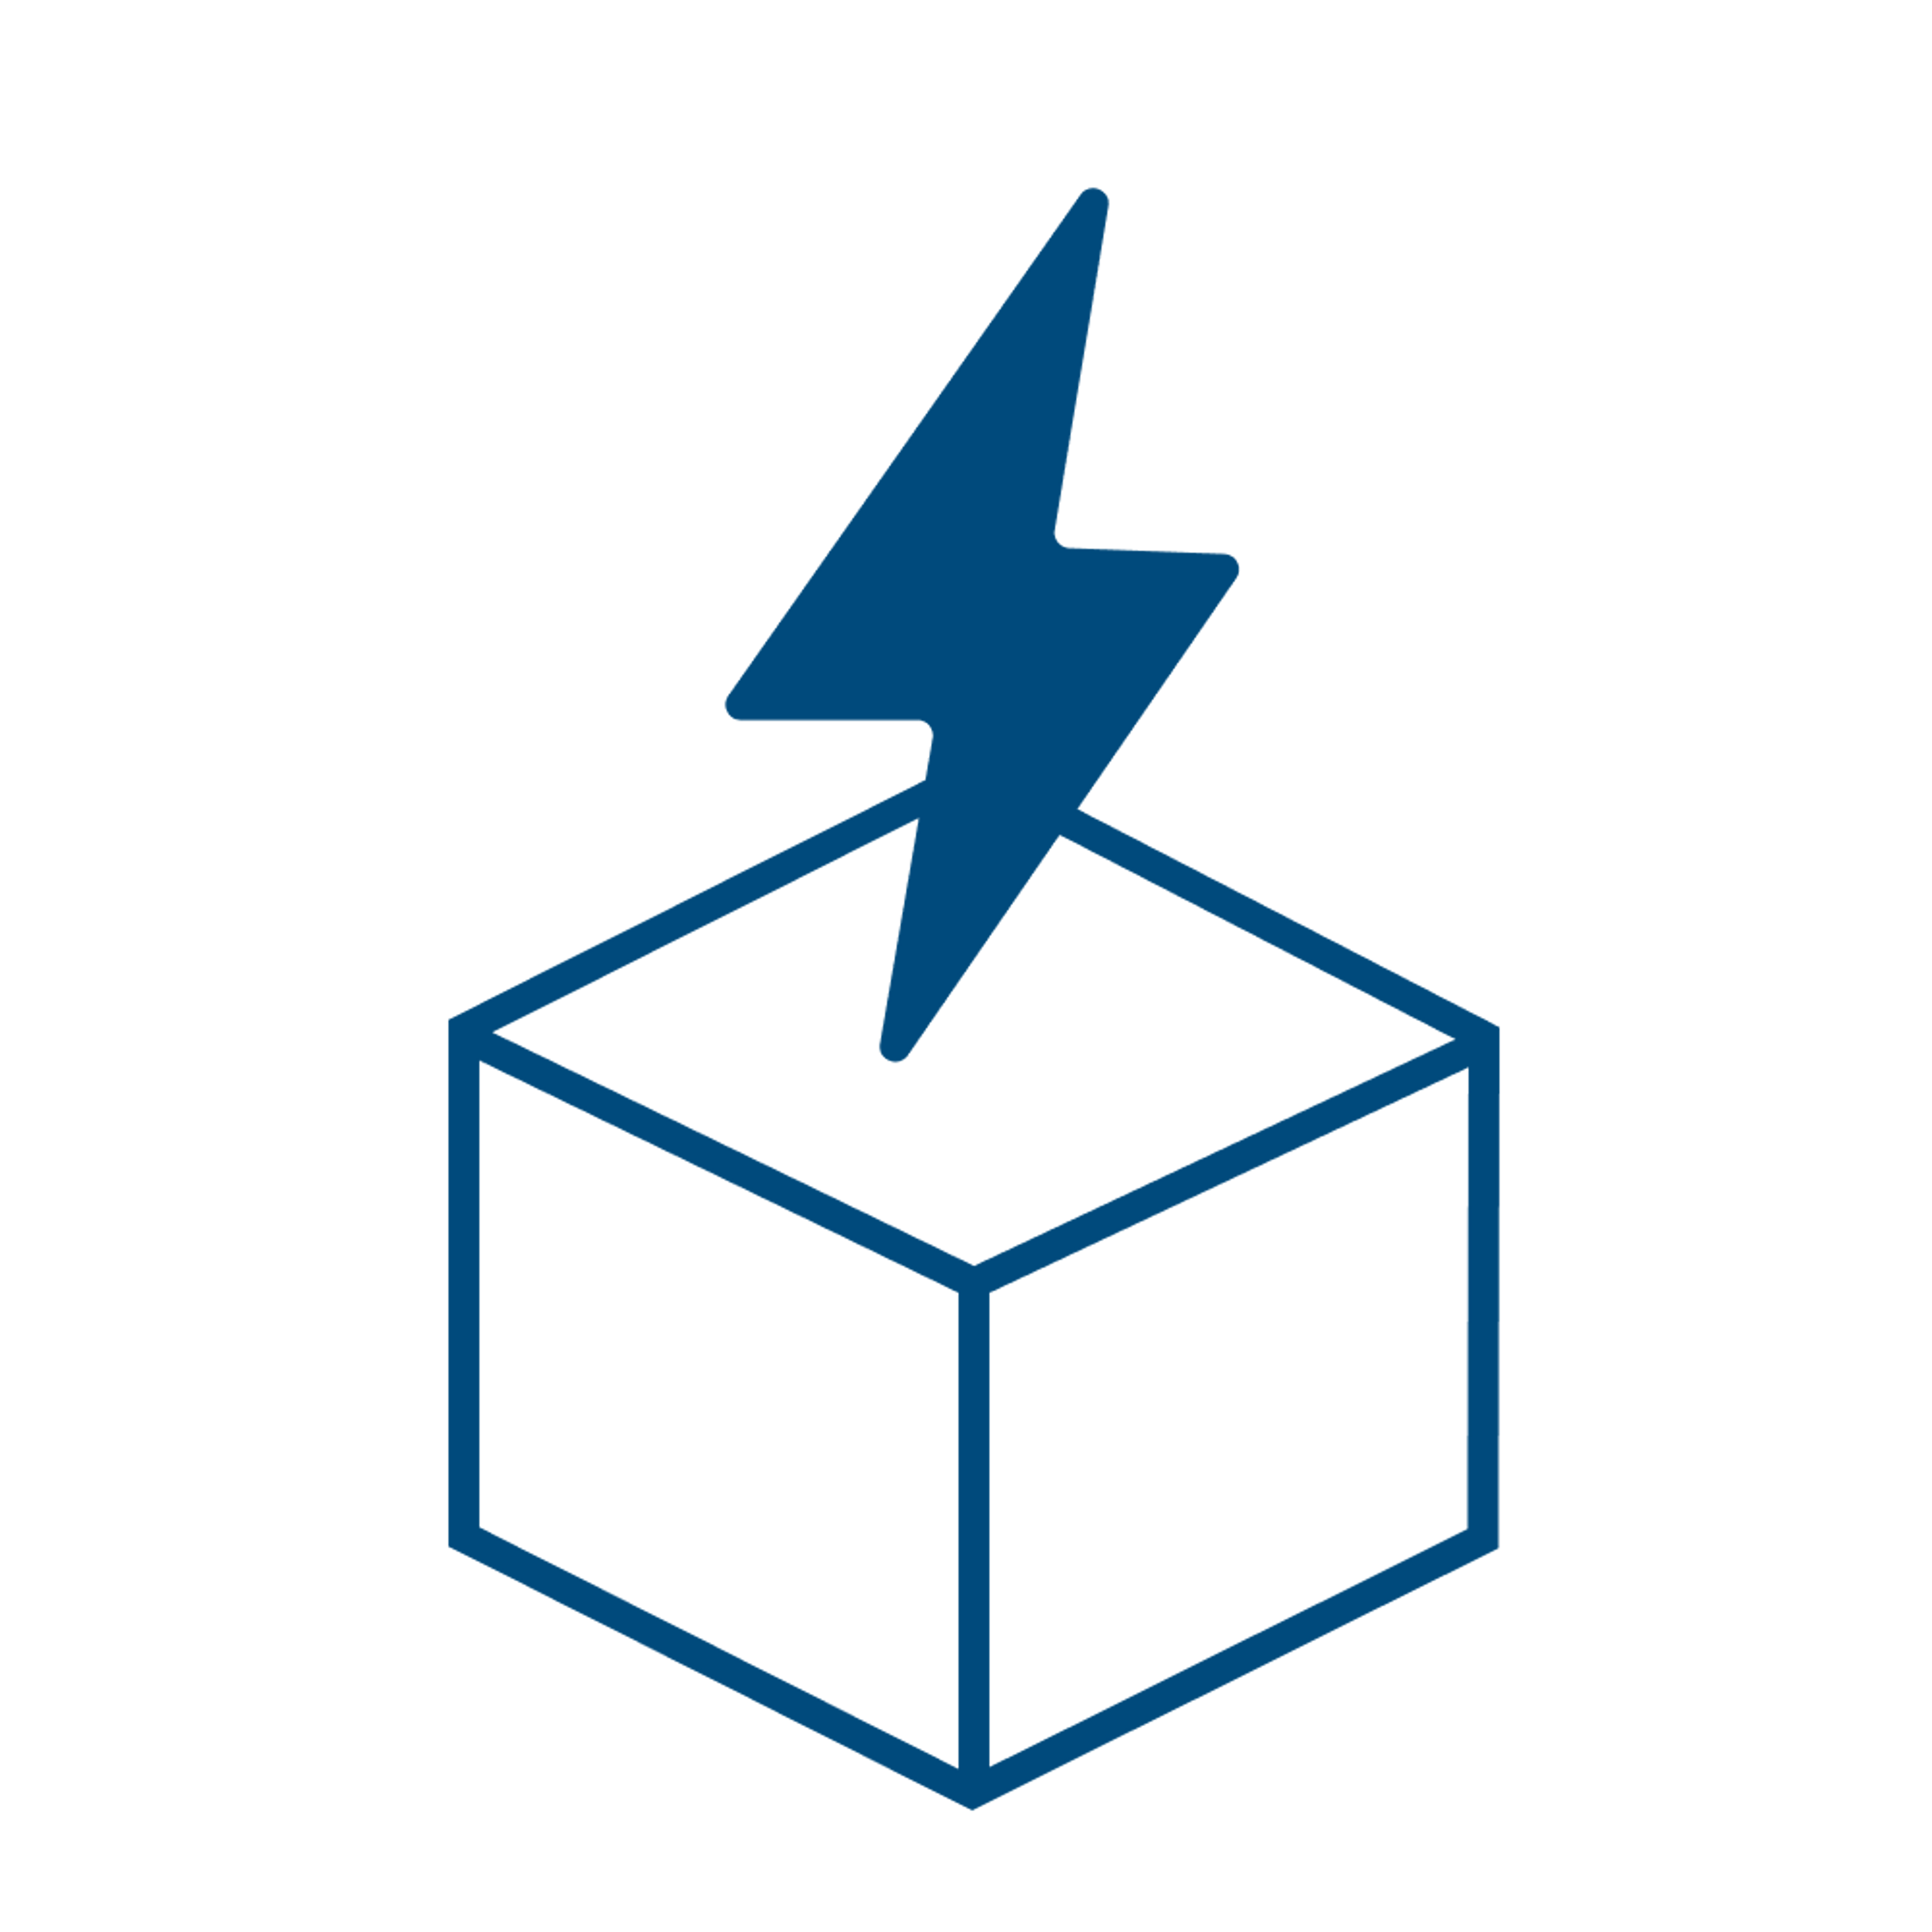 An icon depicting a lightning bolt striking a 3D box